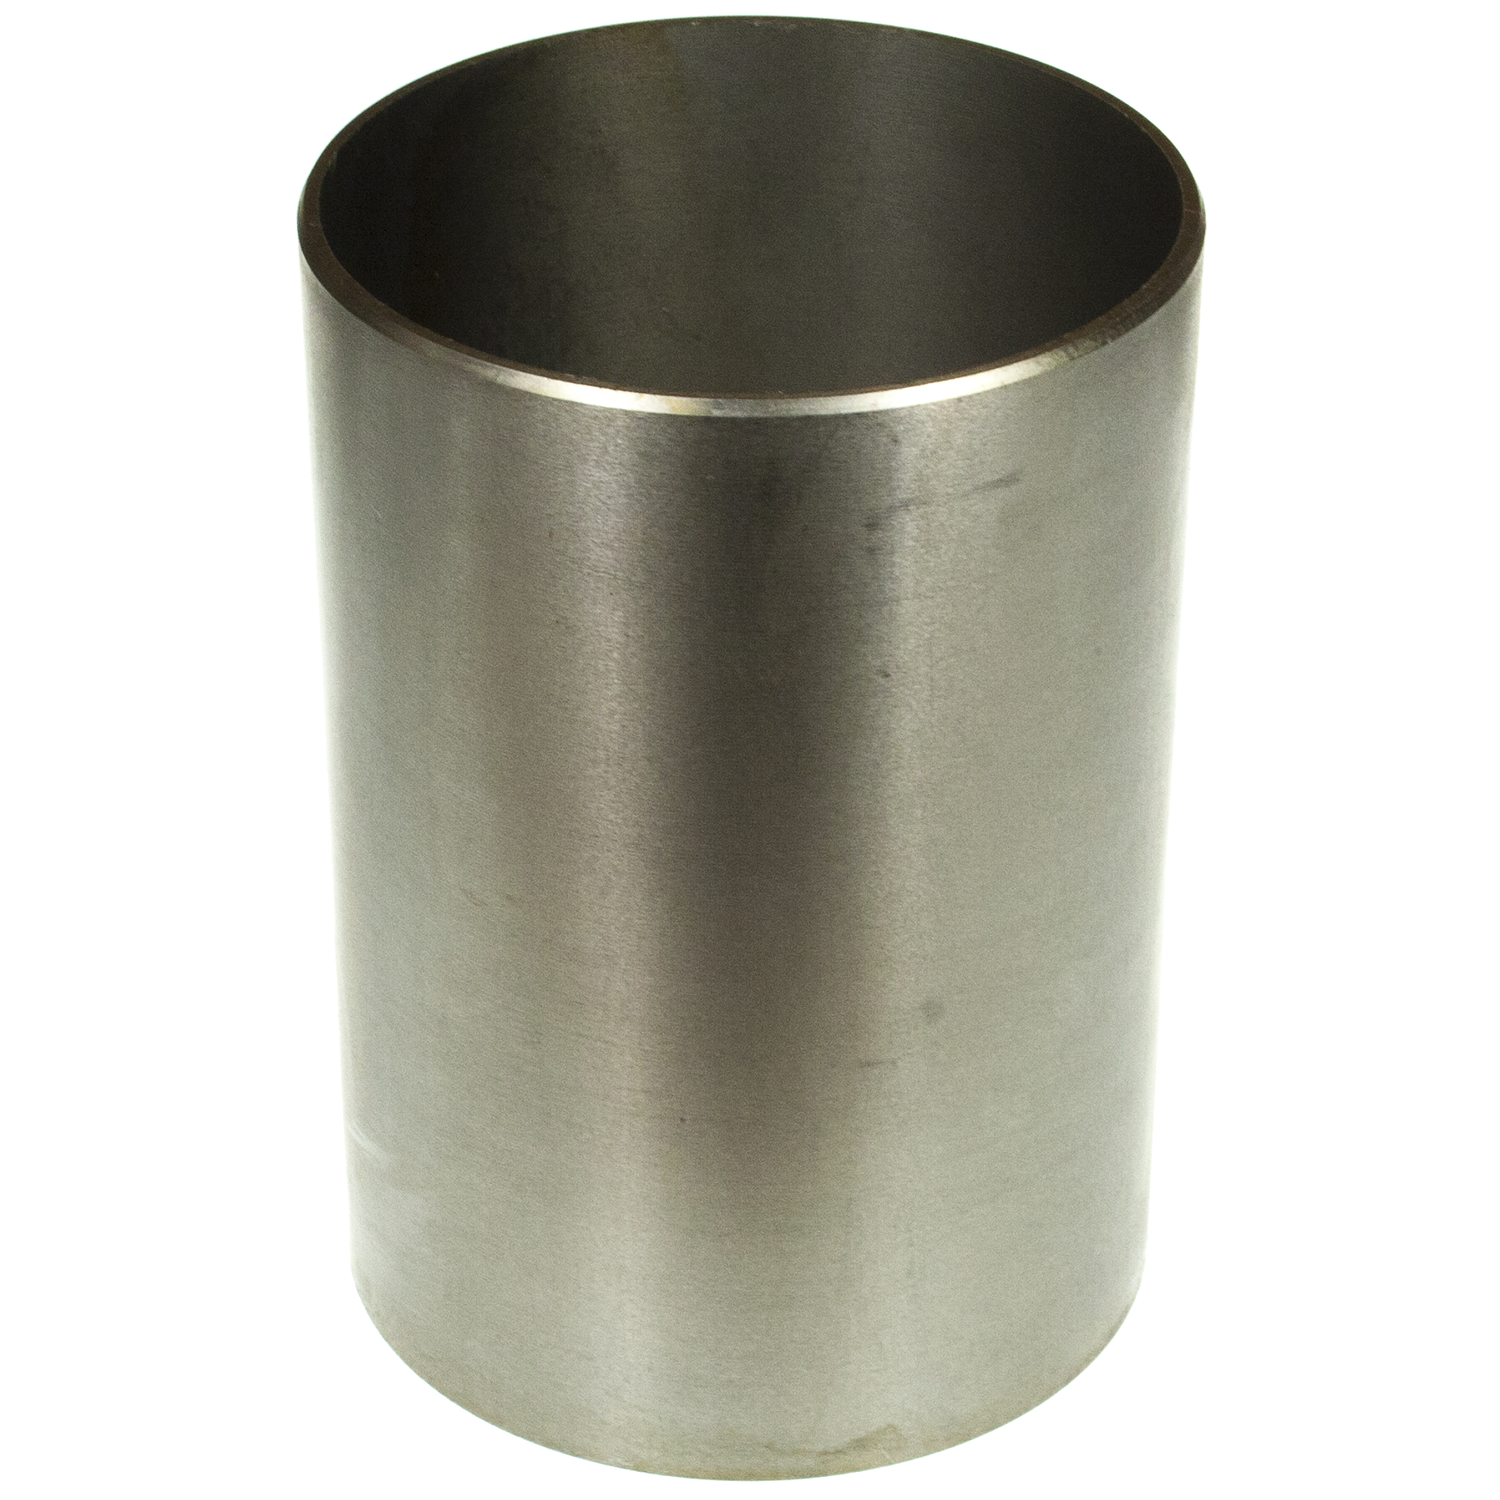 Cylinder Sleeve 4.0400 Bore Dia